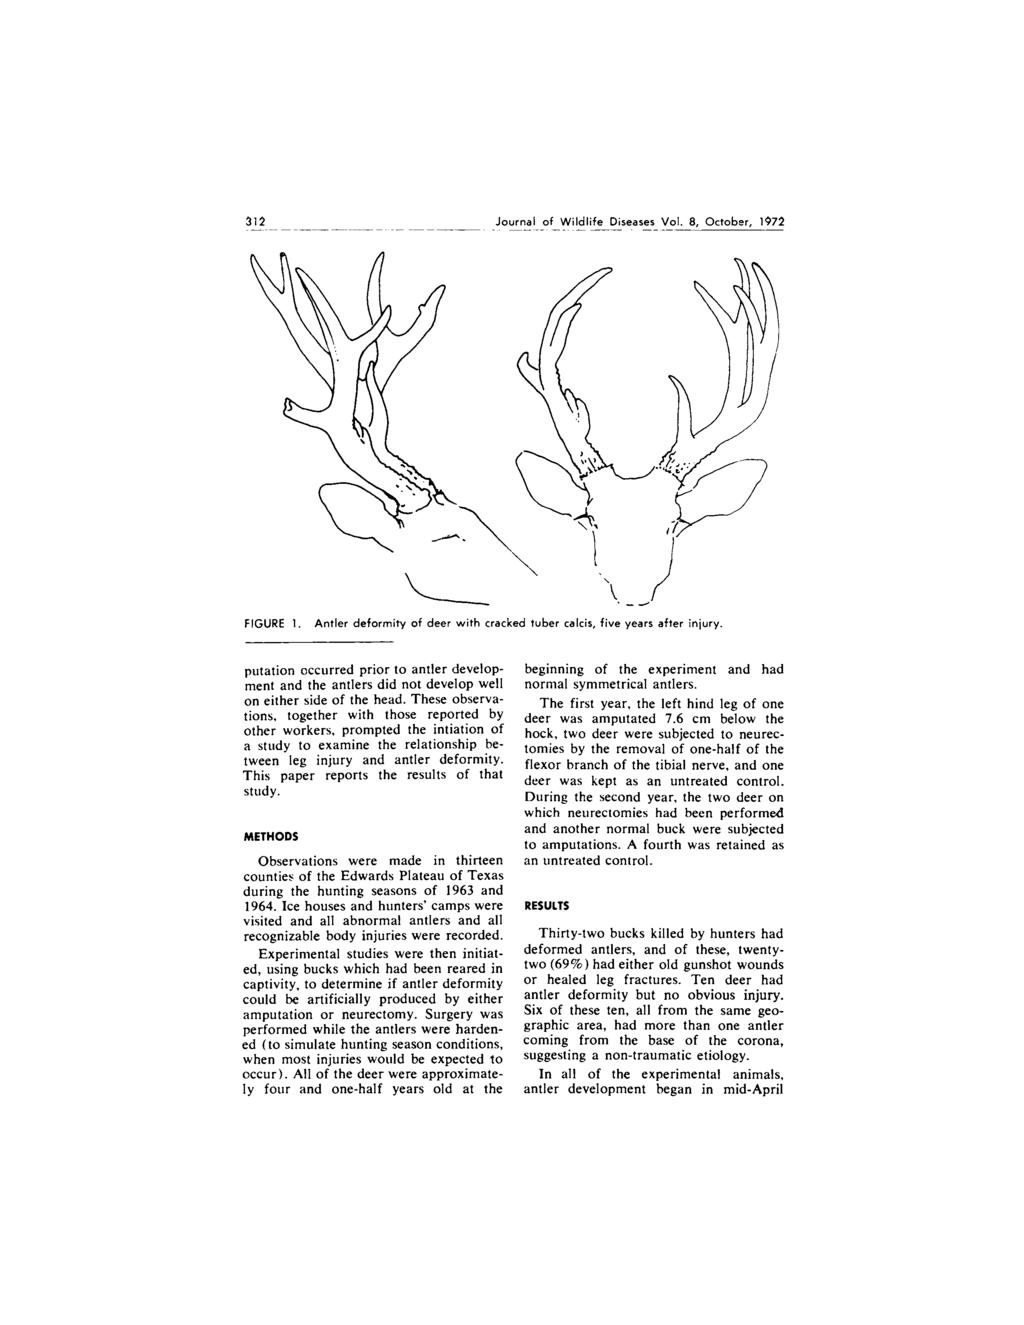 312 Journal of Wildlife Diseases Vol. 8, October, 1972.- - -.-- - -. - - - FIGURE 1. Antler deformity of deer with cracked tuber calcis, five years after injury.